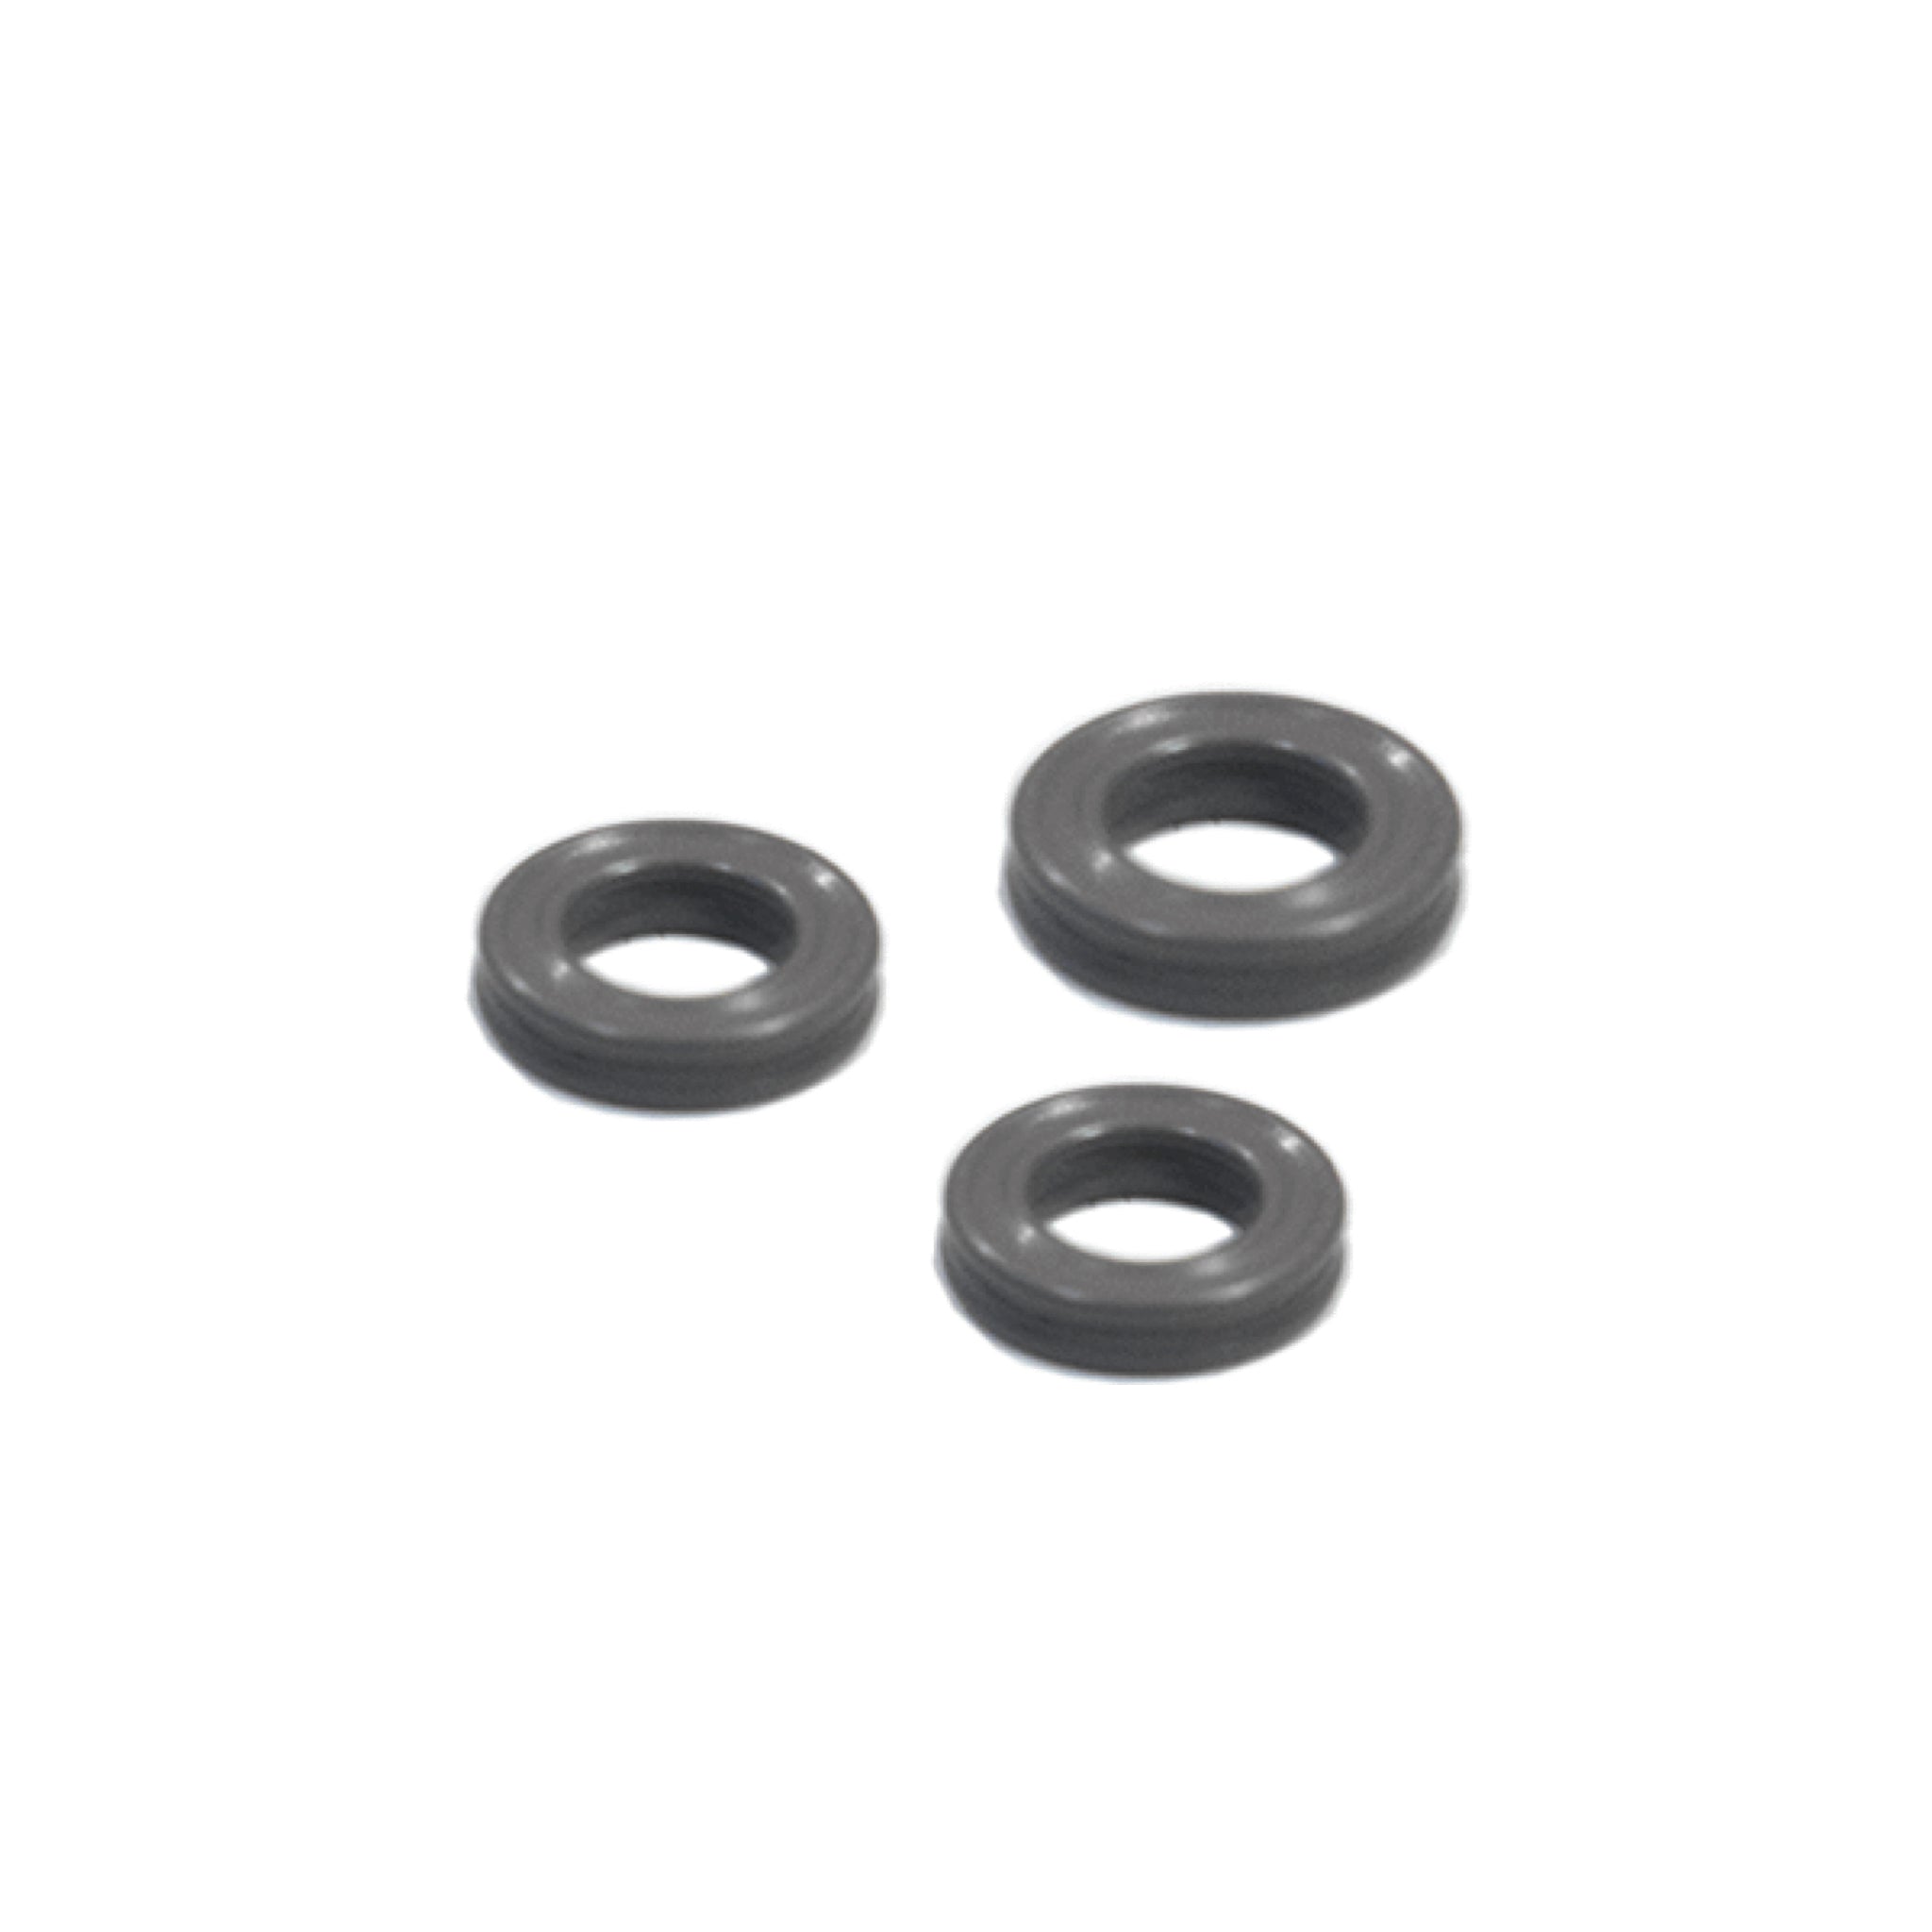 3 grey O-rings laid flat